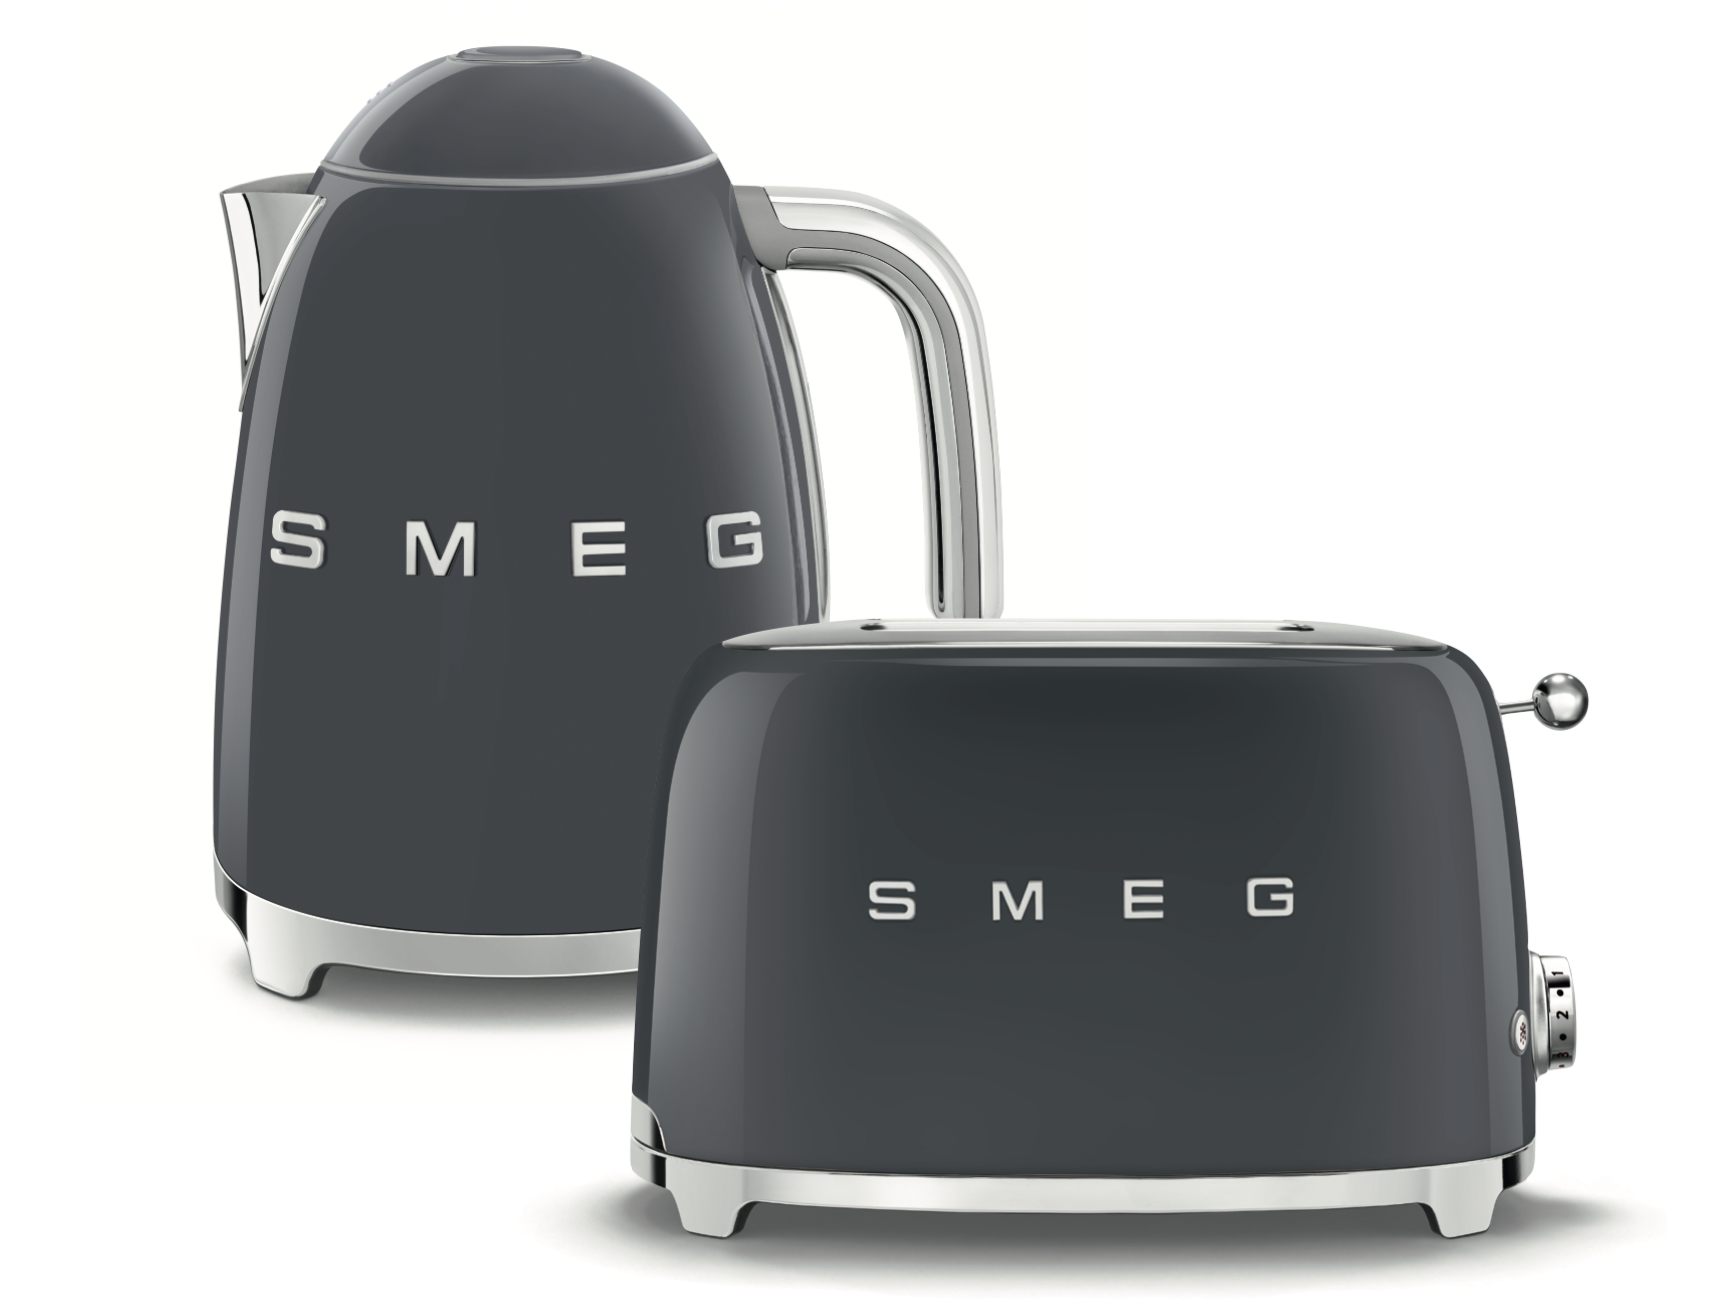 SMEG Wasserkocher - Toaster Set Anthrazit Grau